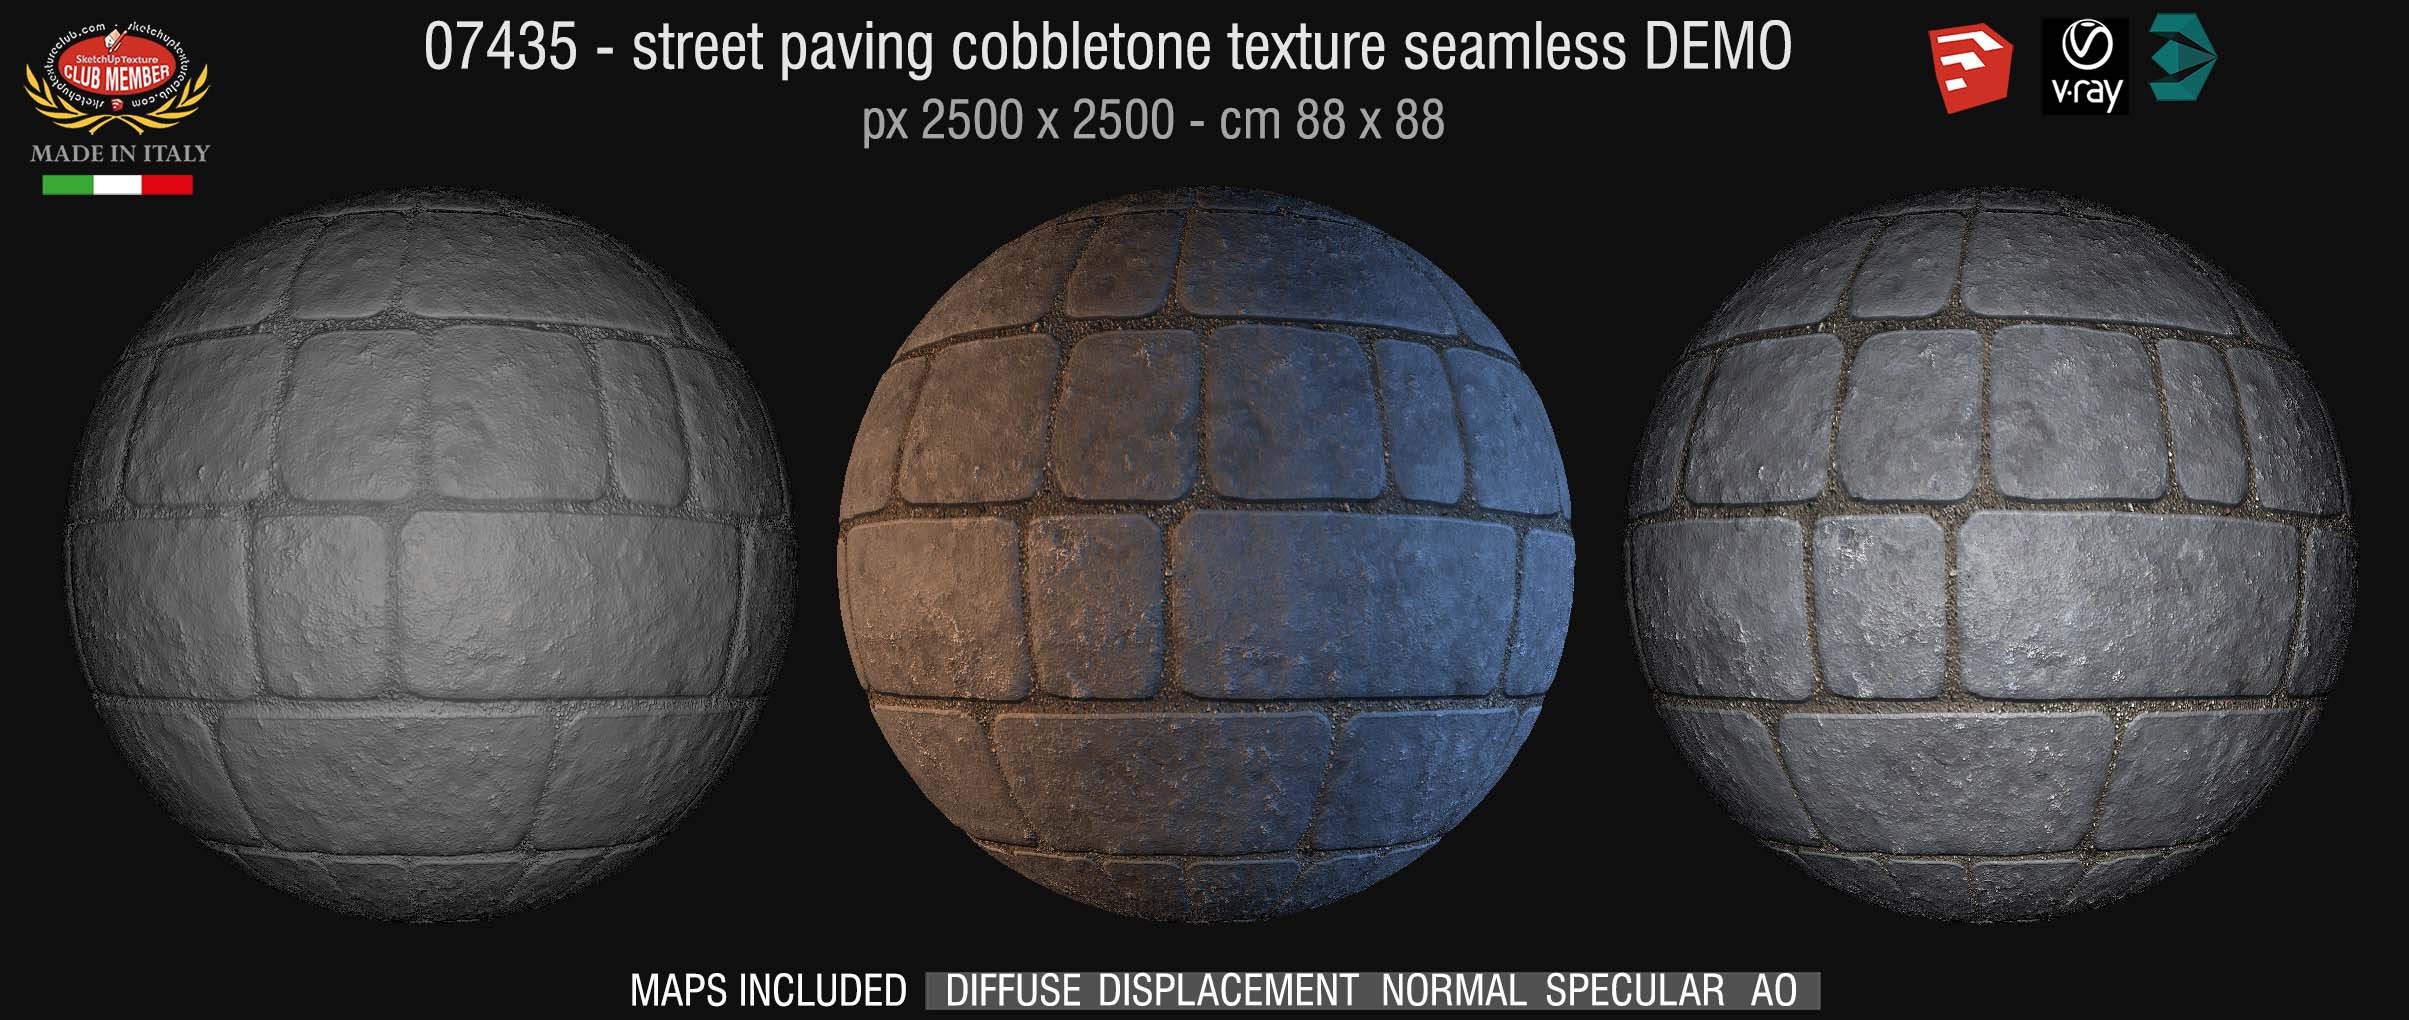 07435 HR Street paving cobblestone texture + maps DEMO